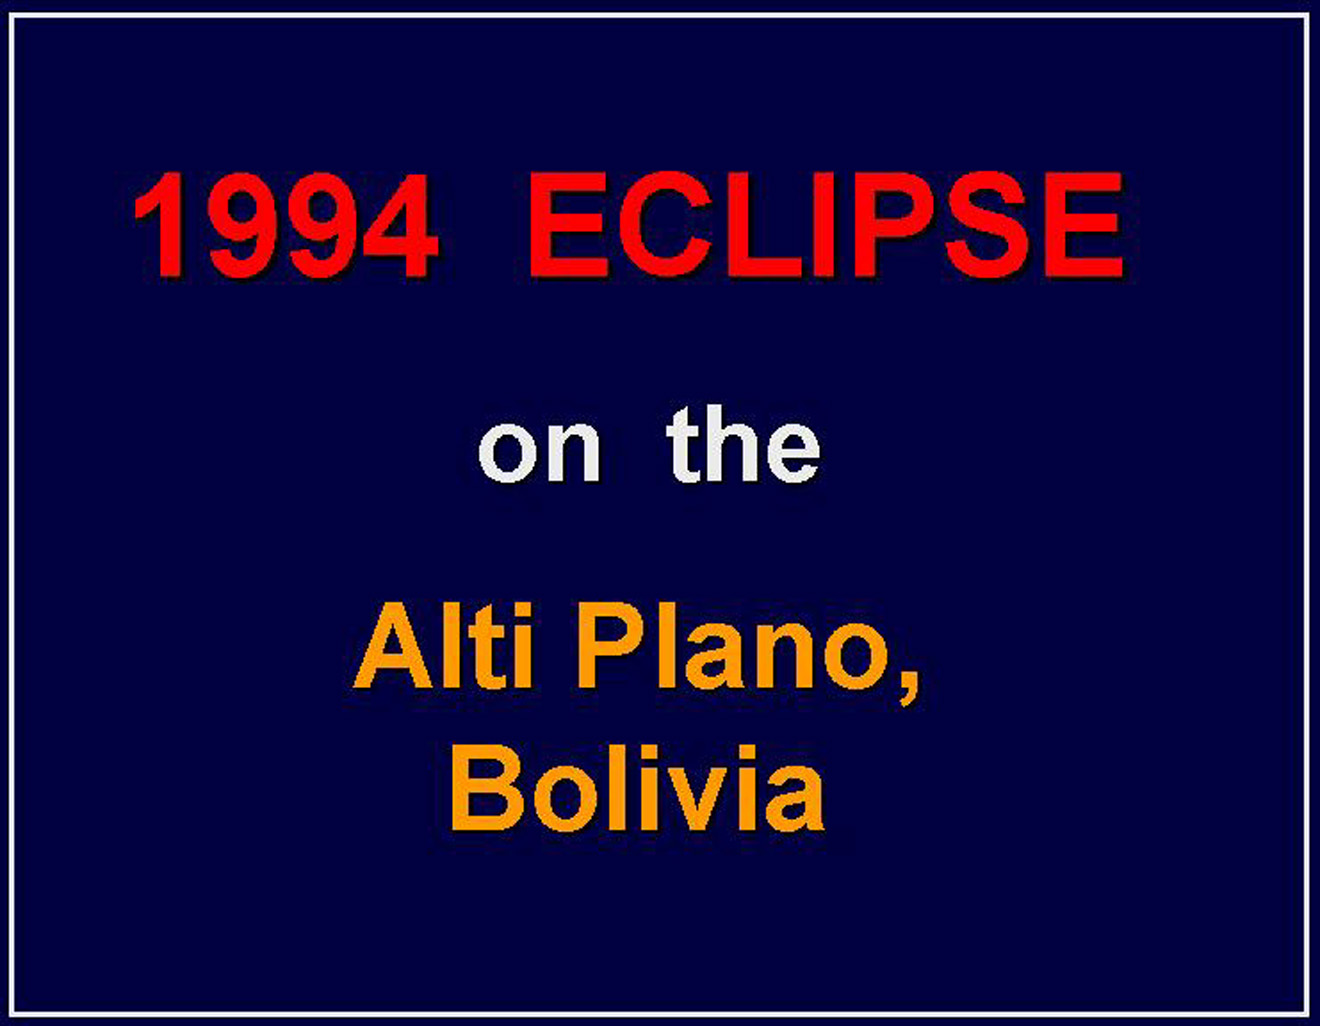 Eclipse 1994 - A18 - Slide12 - Title